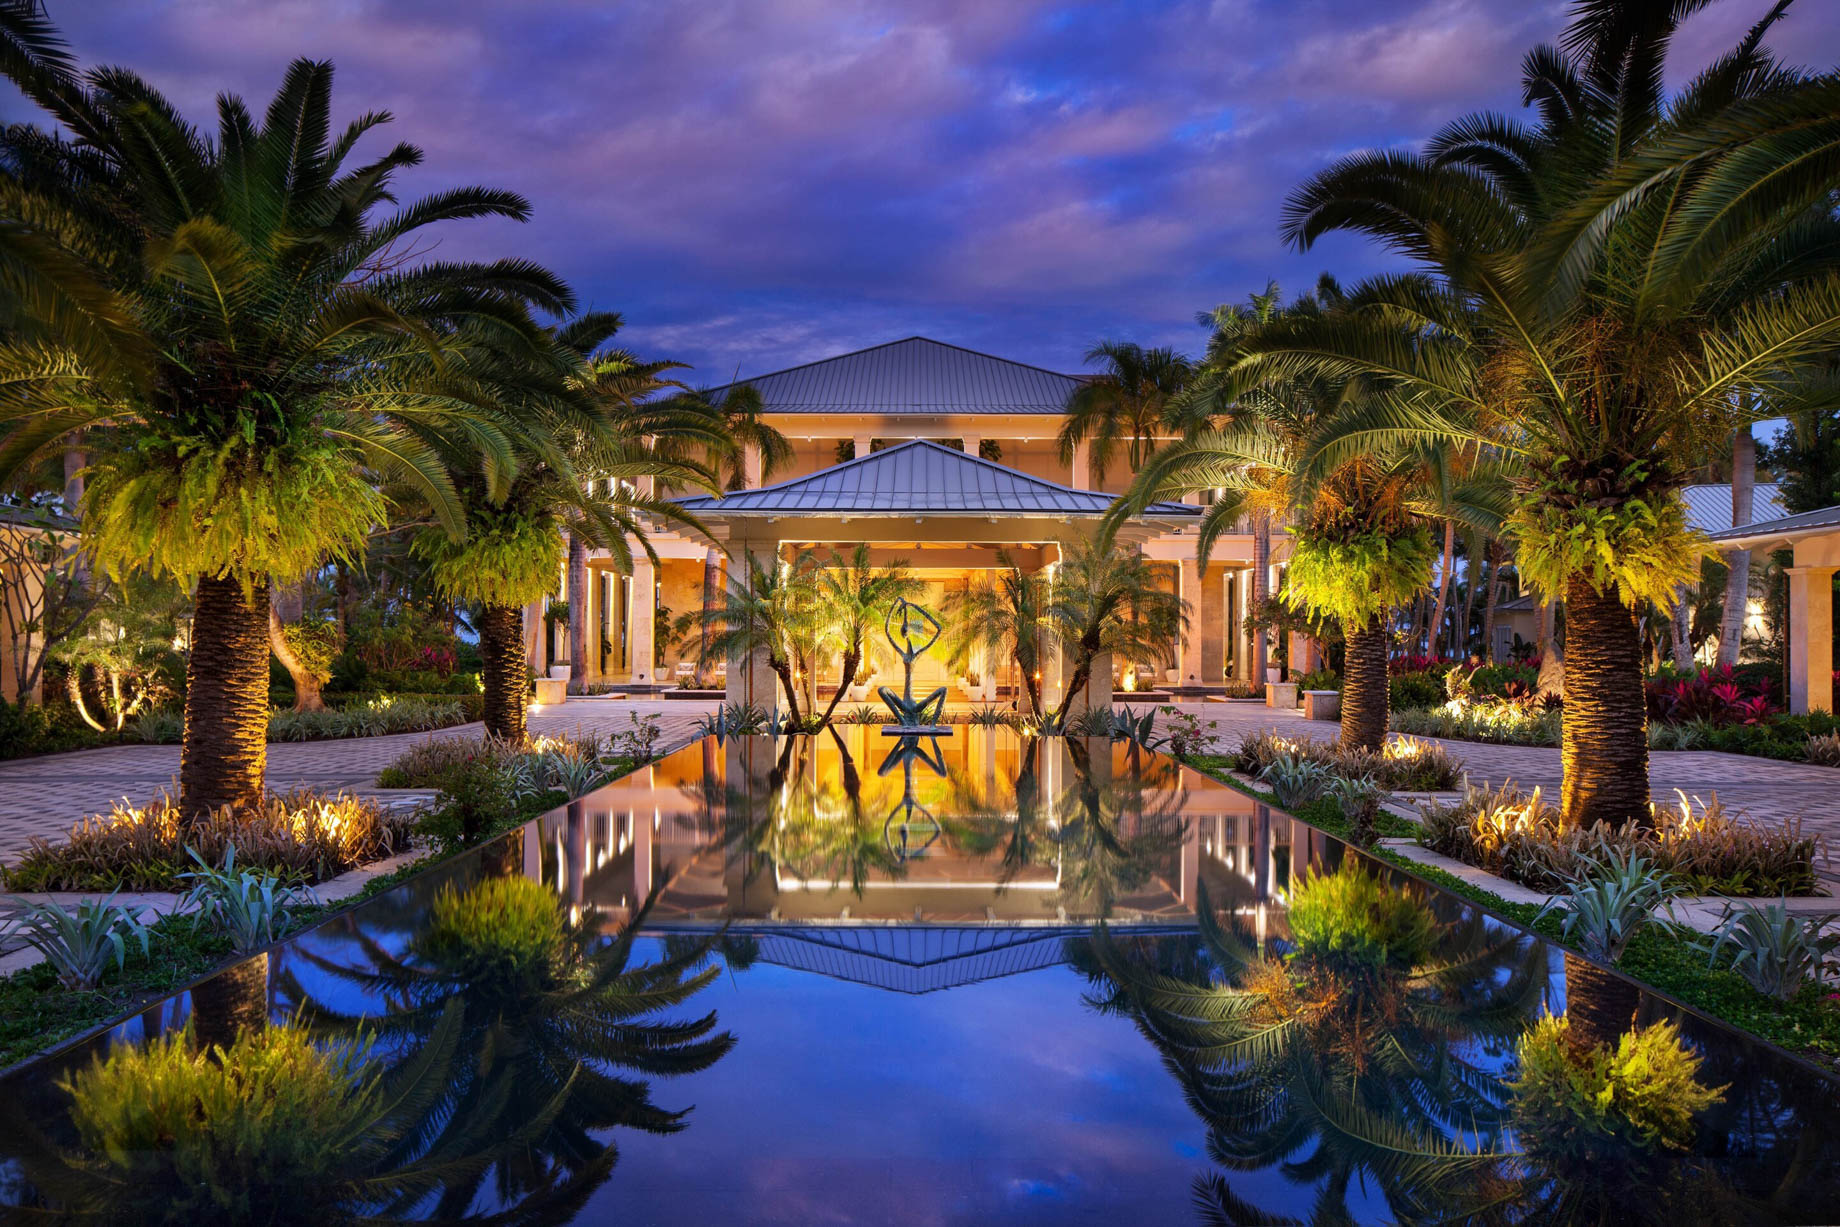 The St. Regis Bahia Beach Luxury Resort - Rio Grande, Puerto Rico